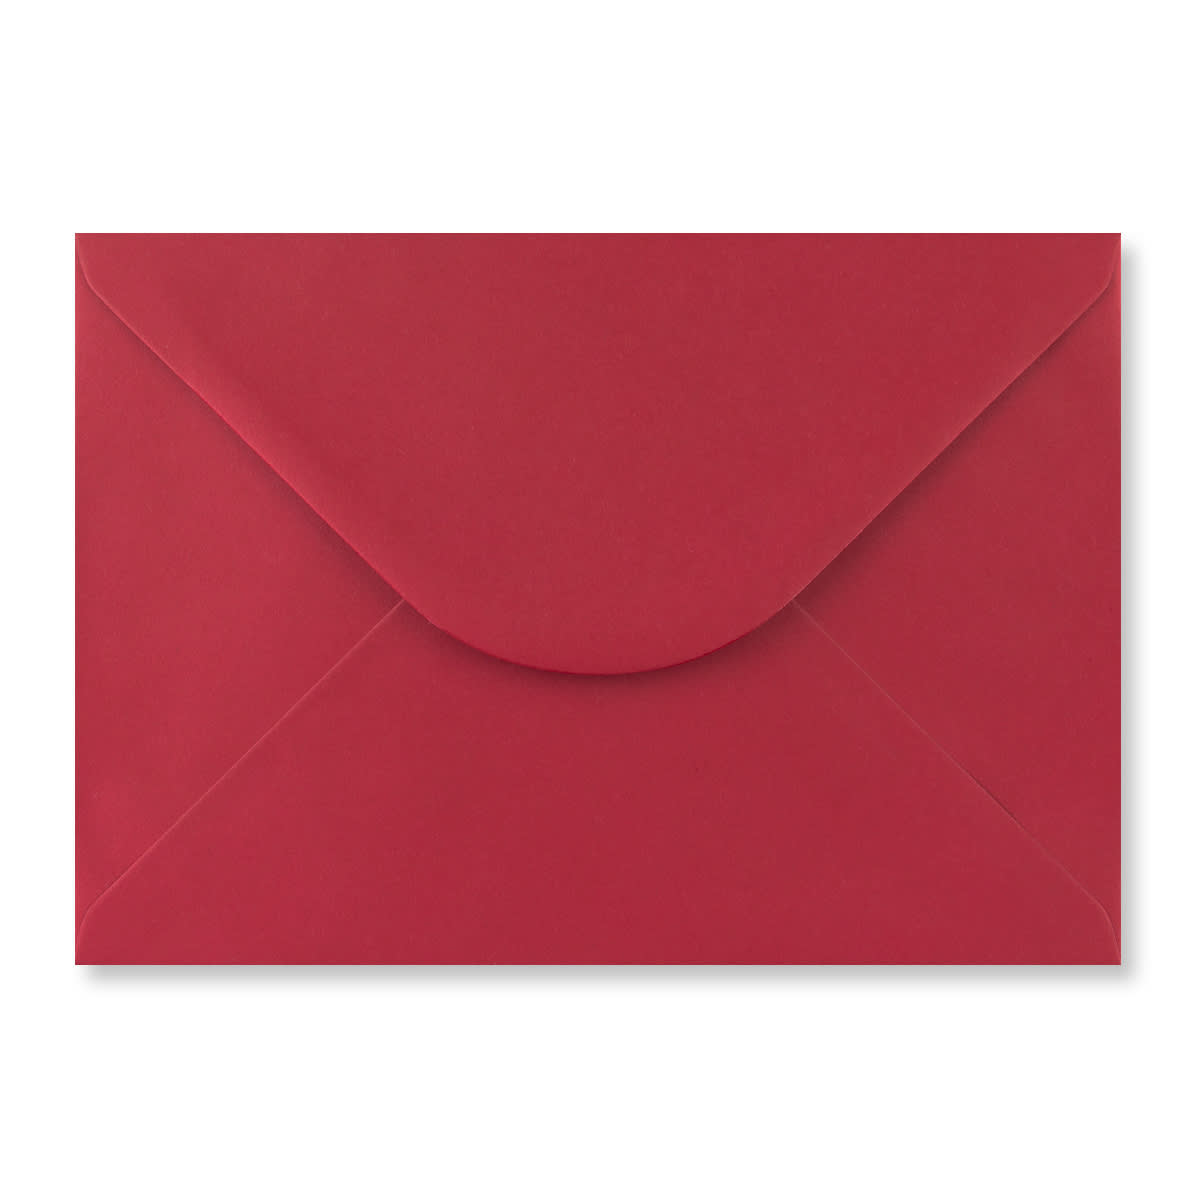 Scarlett Red 165 x 235mm Envelopes 100gsm